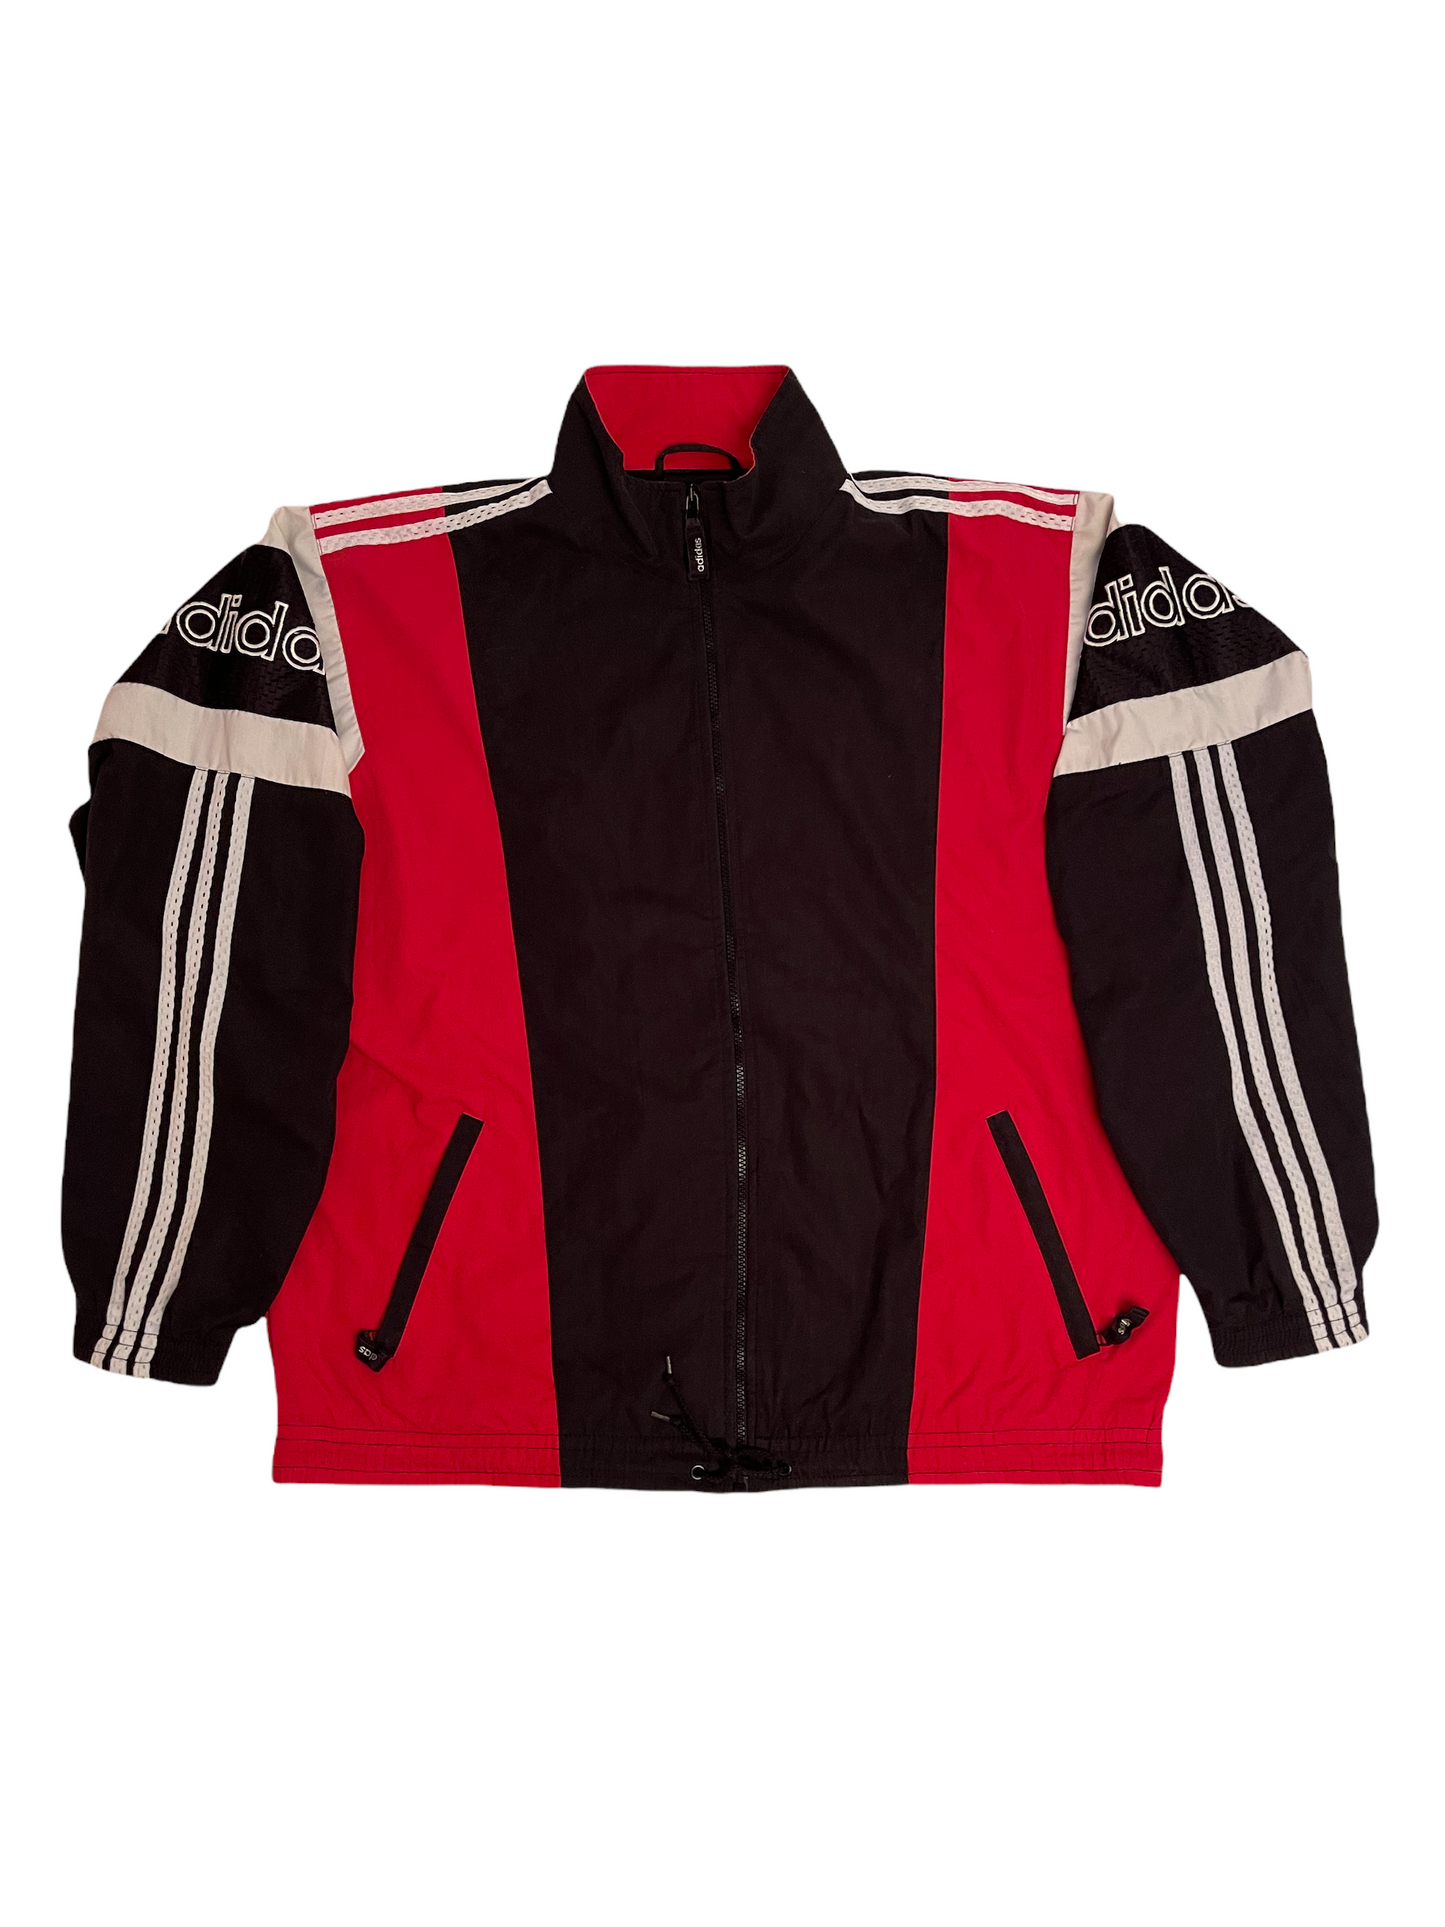 Vintage 90's Adidas Jacket Size XL-XXL Red Black